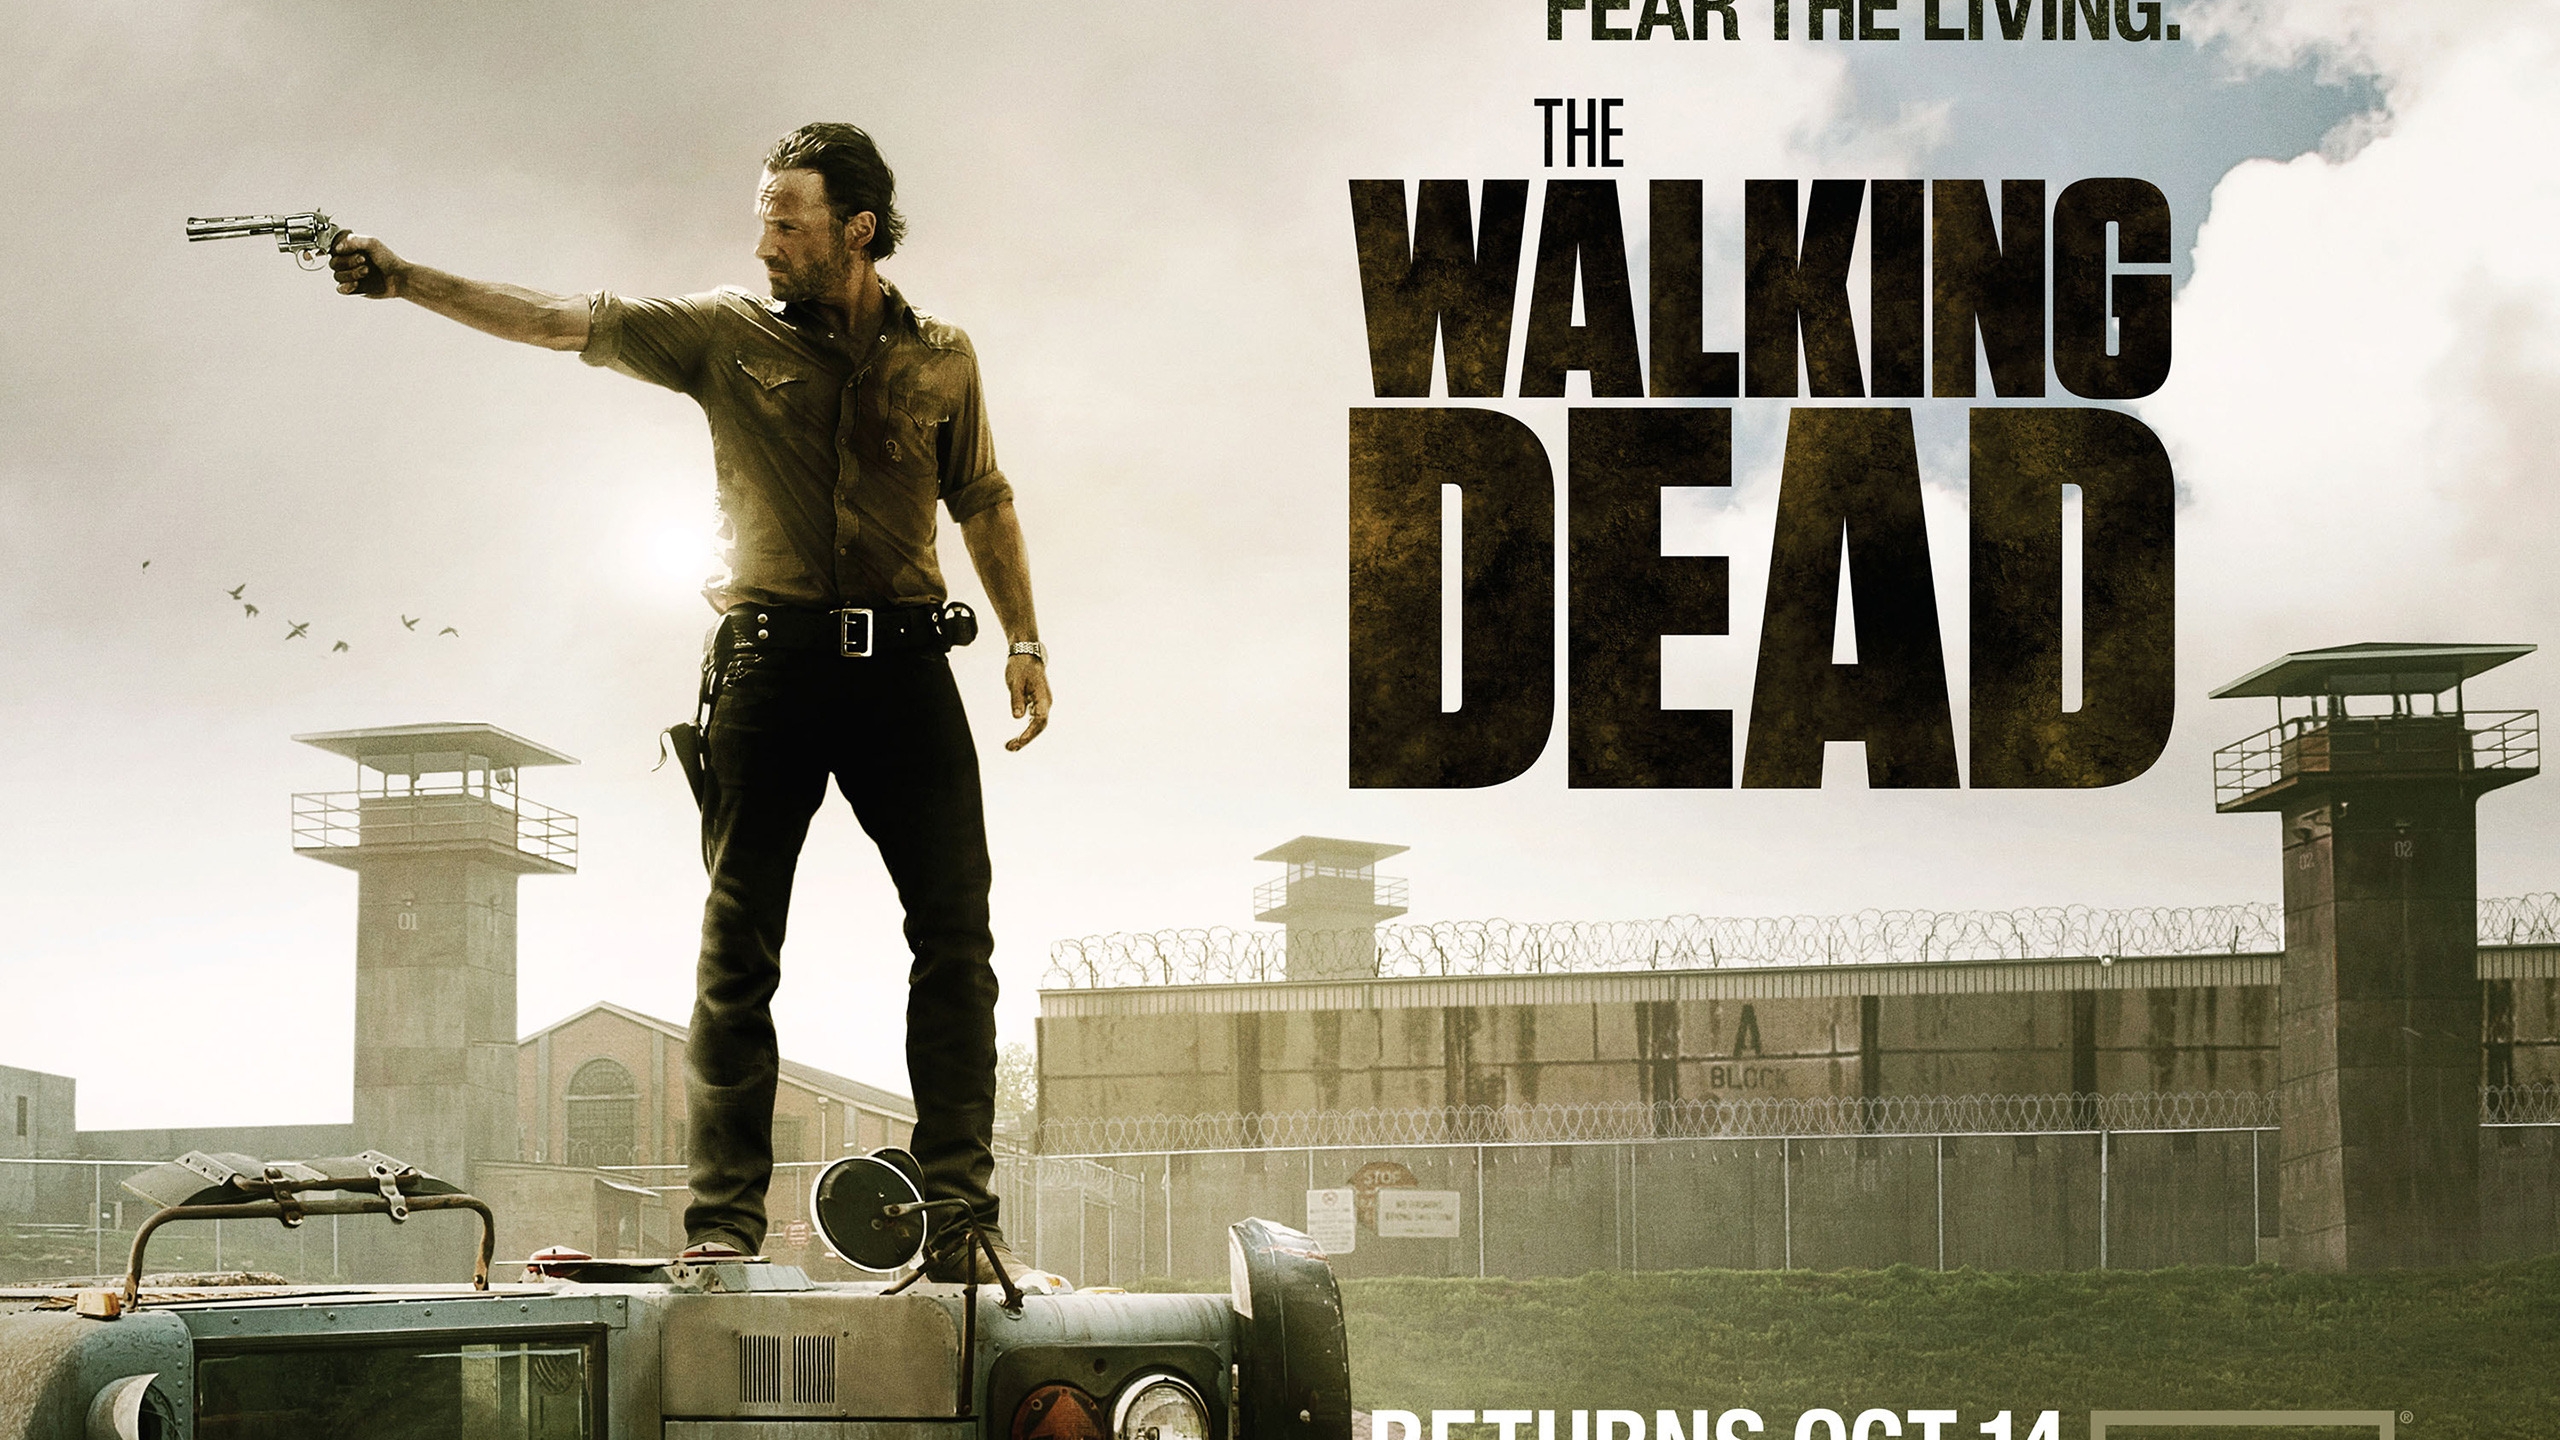 The Walking Dead Season 4 for 2560x1440 HDTV resolution